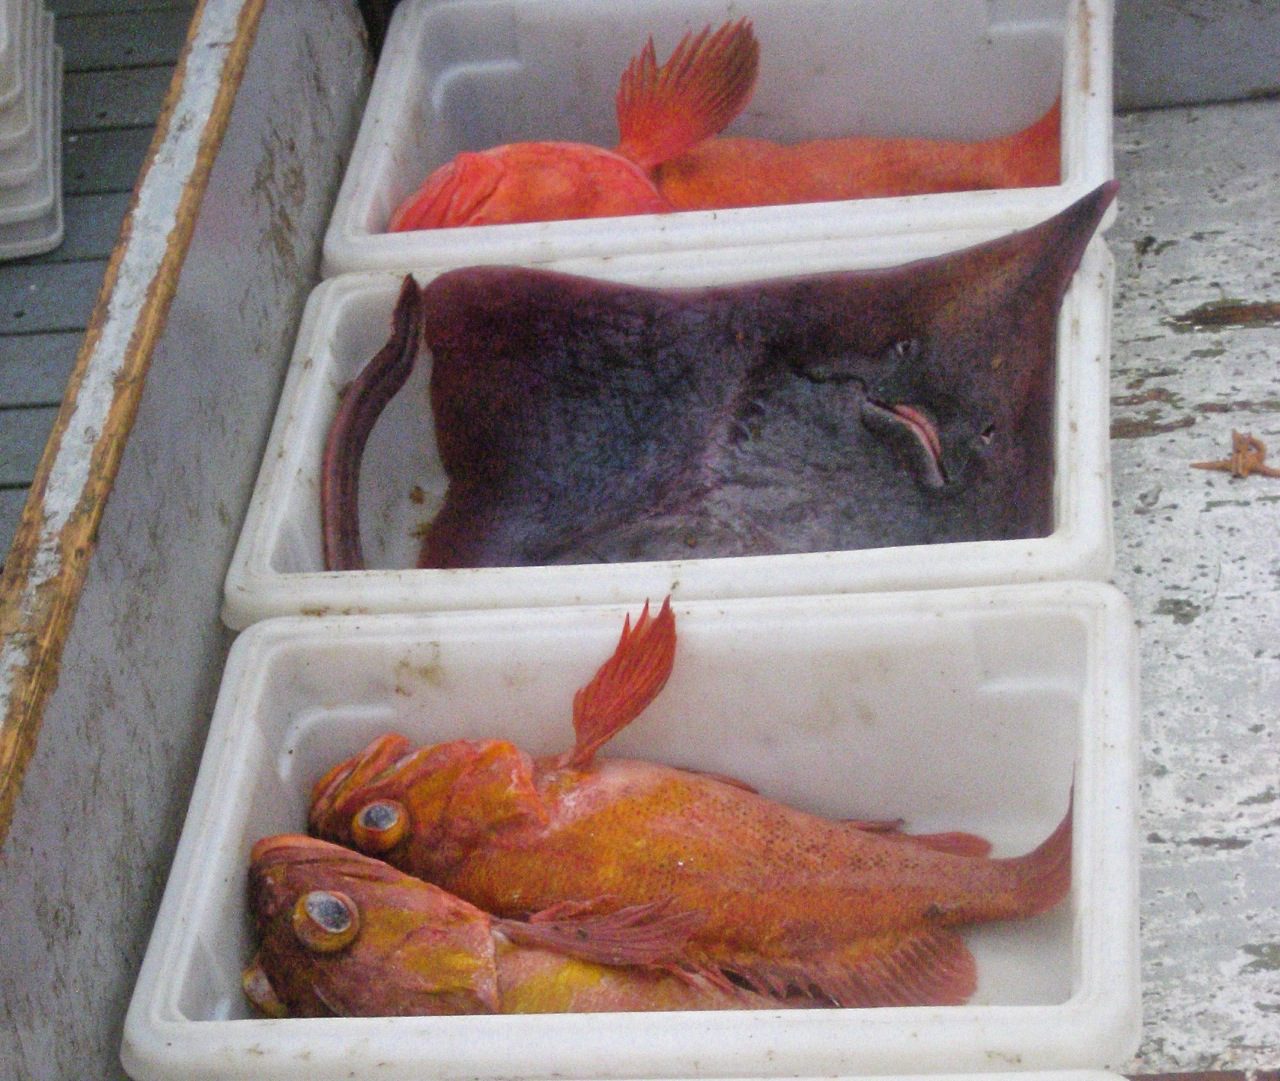 Assorted groundfish